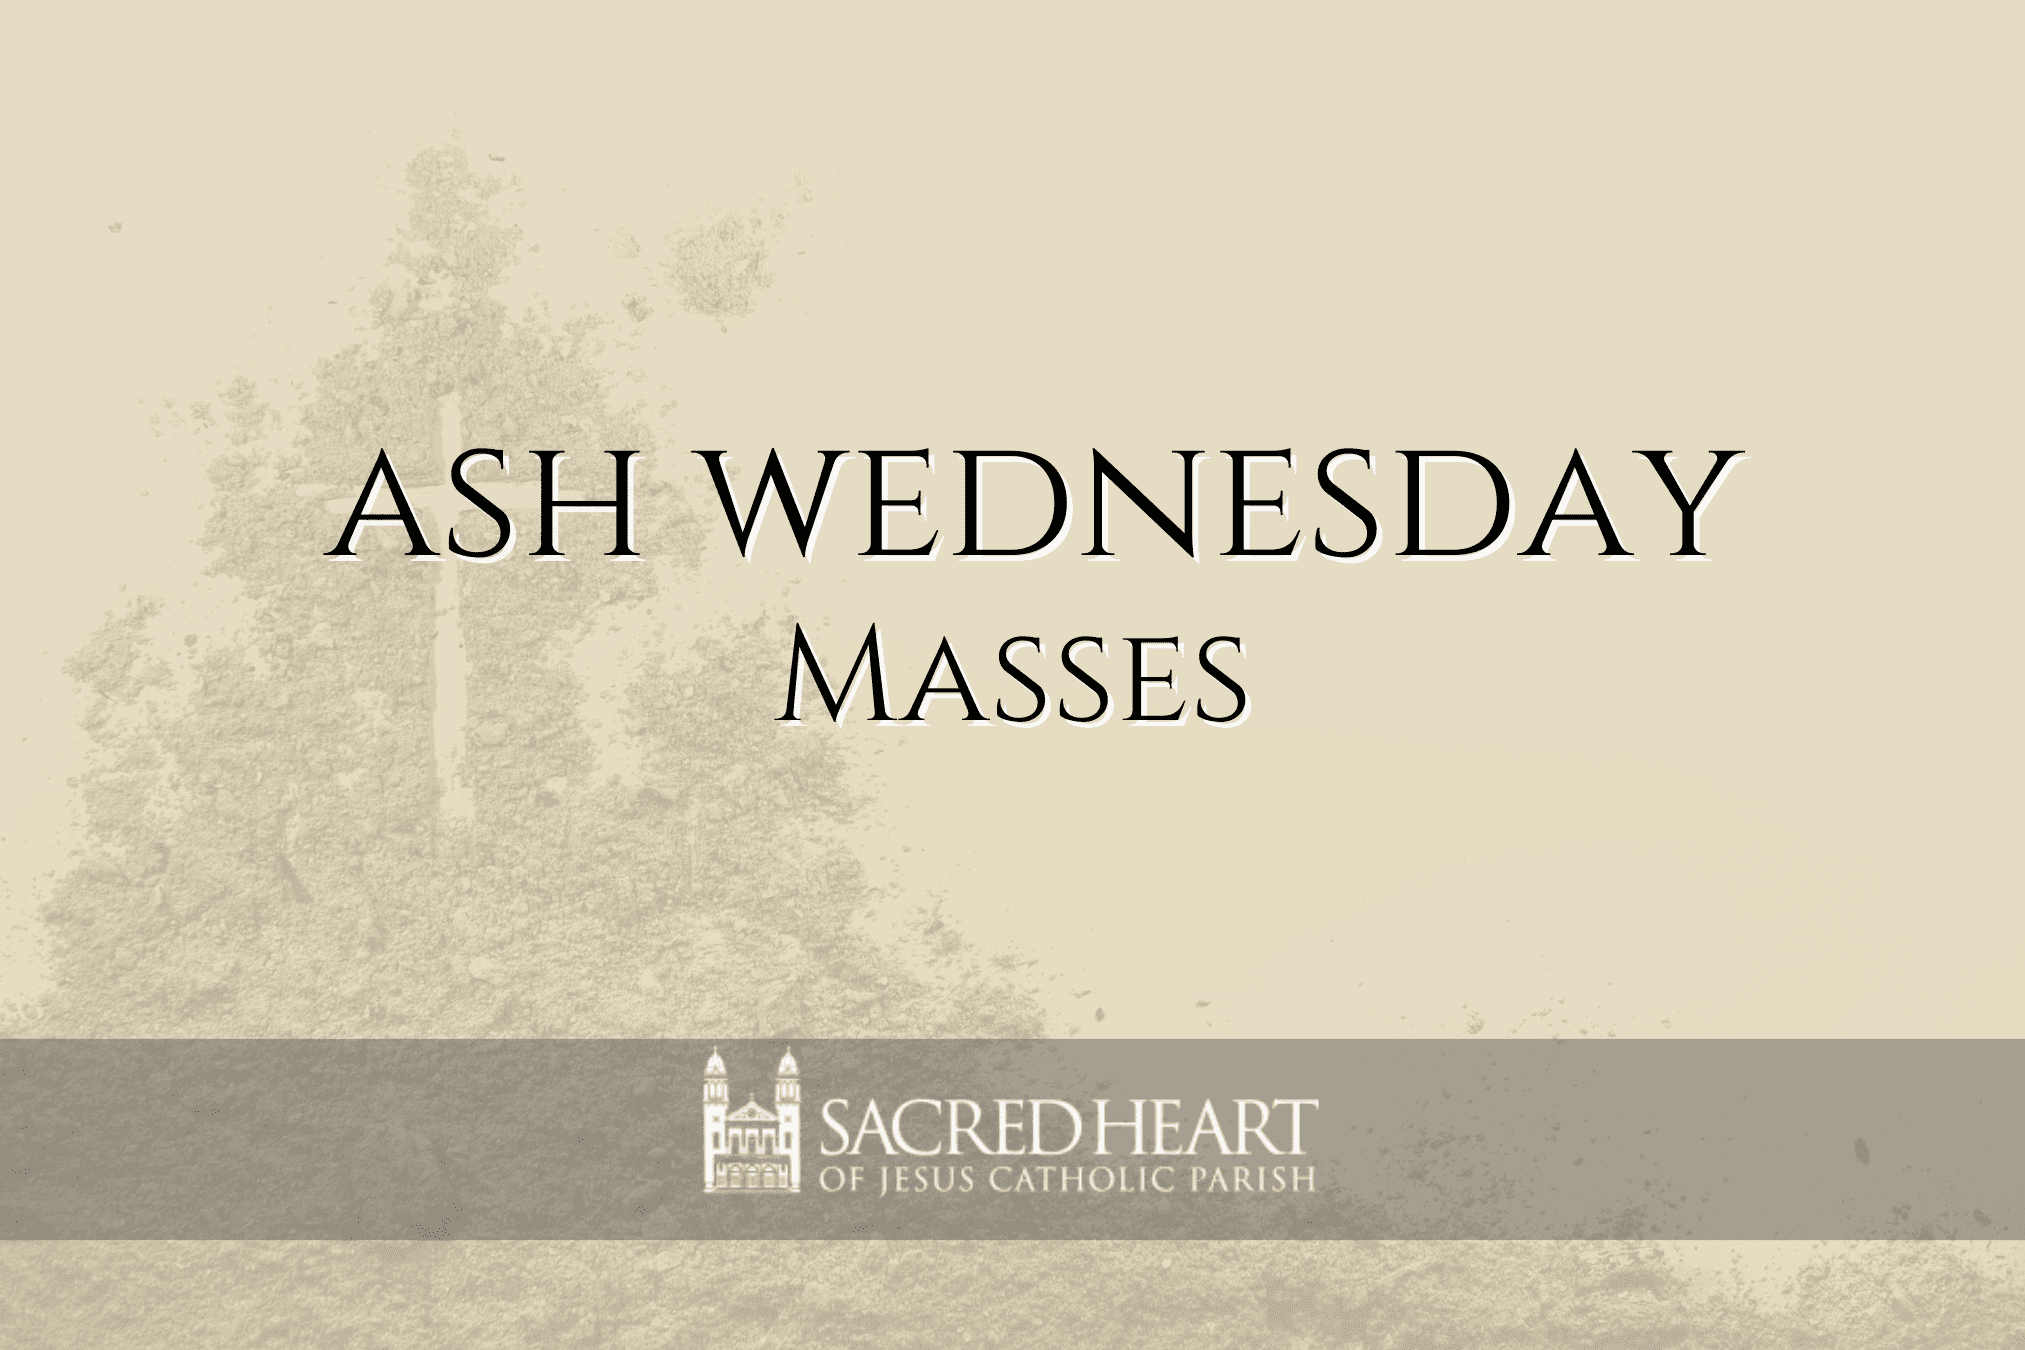 Ash Wednesday—February 14